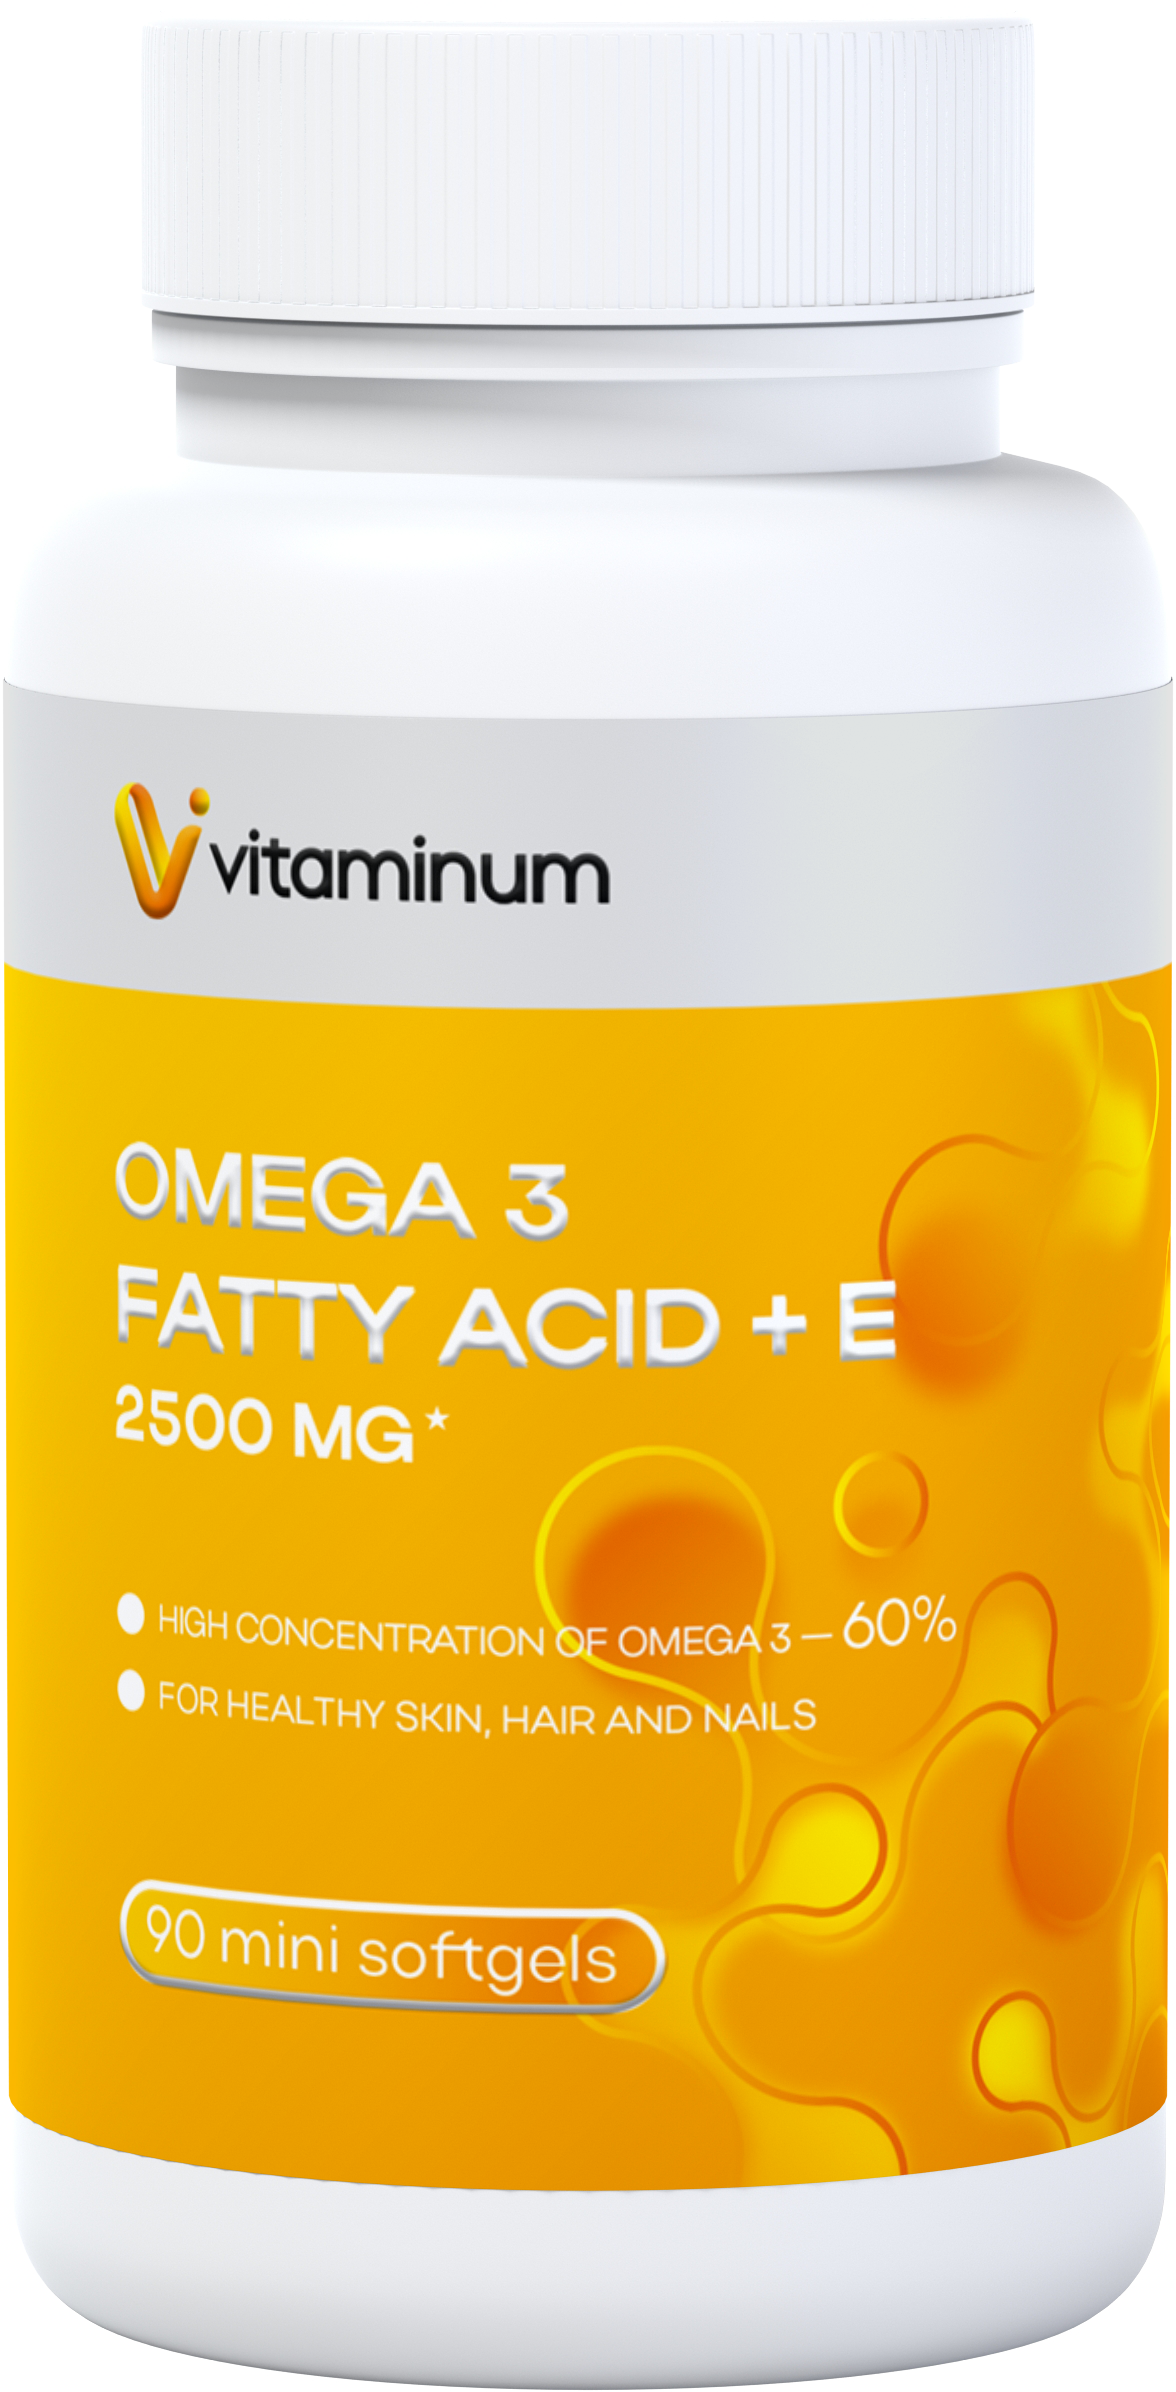  Vitaminum ОМЕГА 3 60% + витамин Е (2500 MG*) 90 капсул 700 мг   в Железногорске